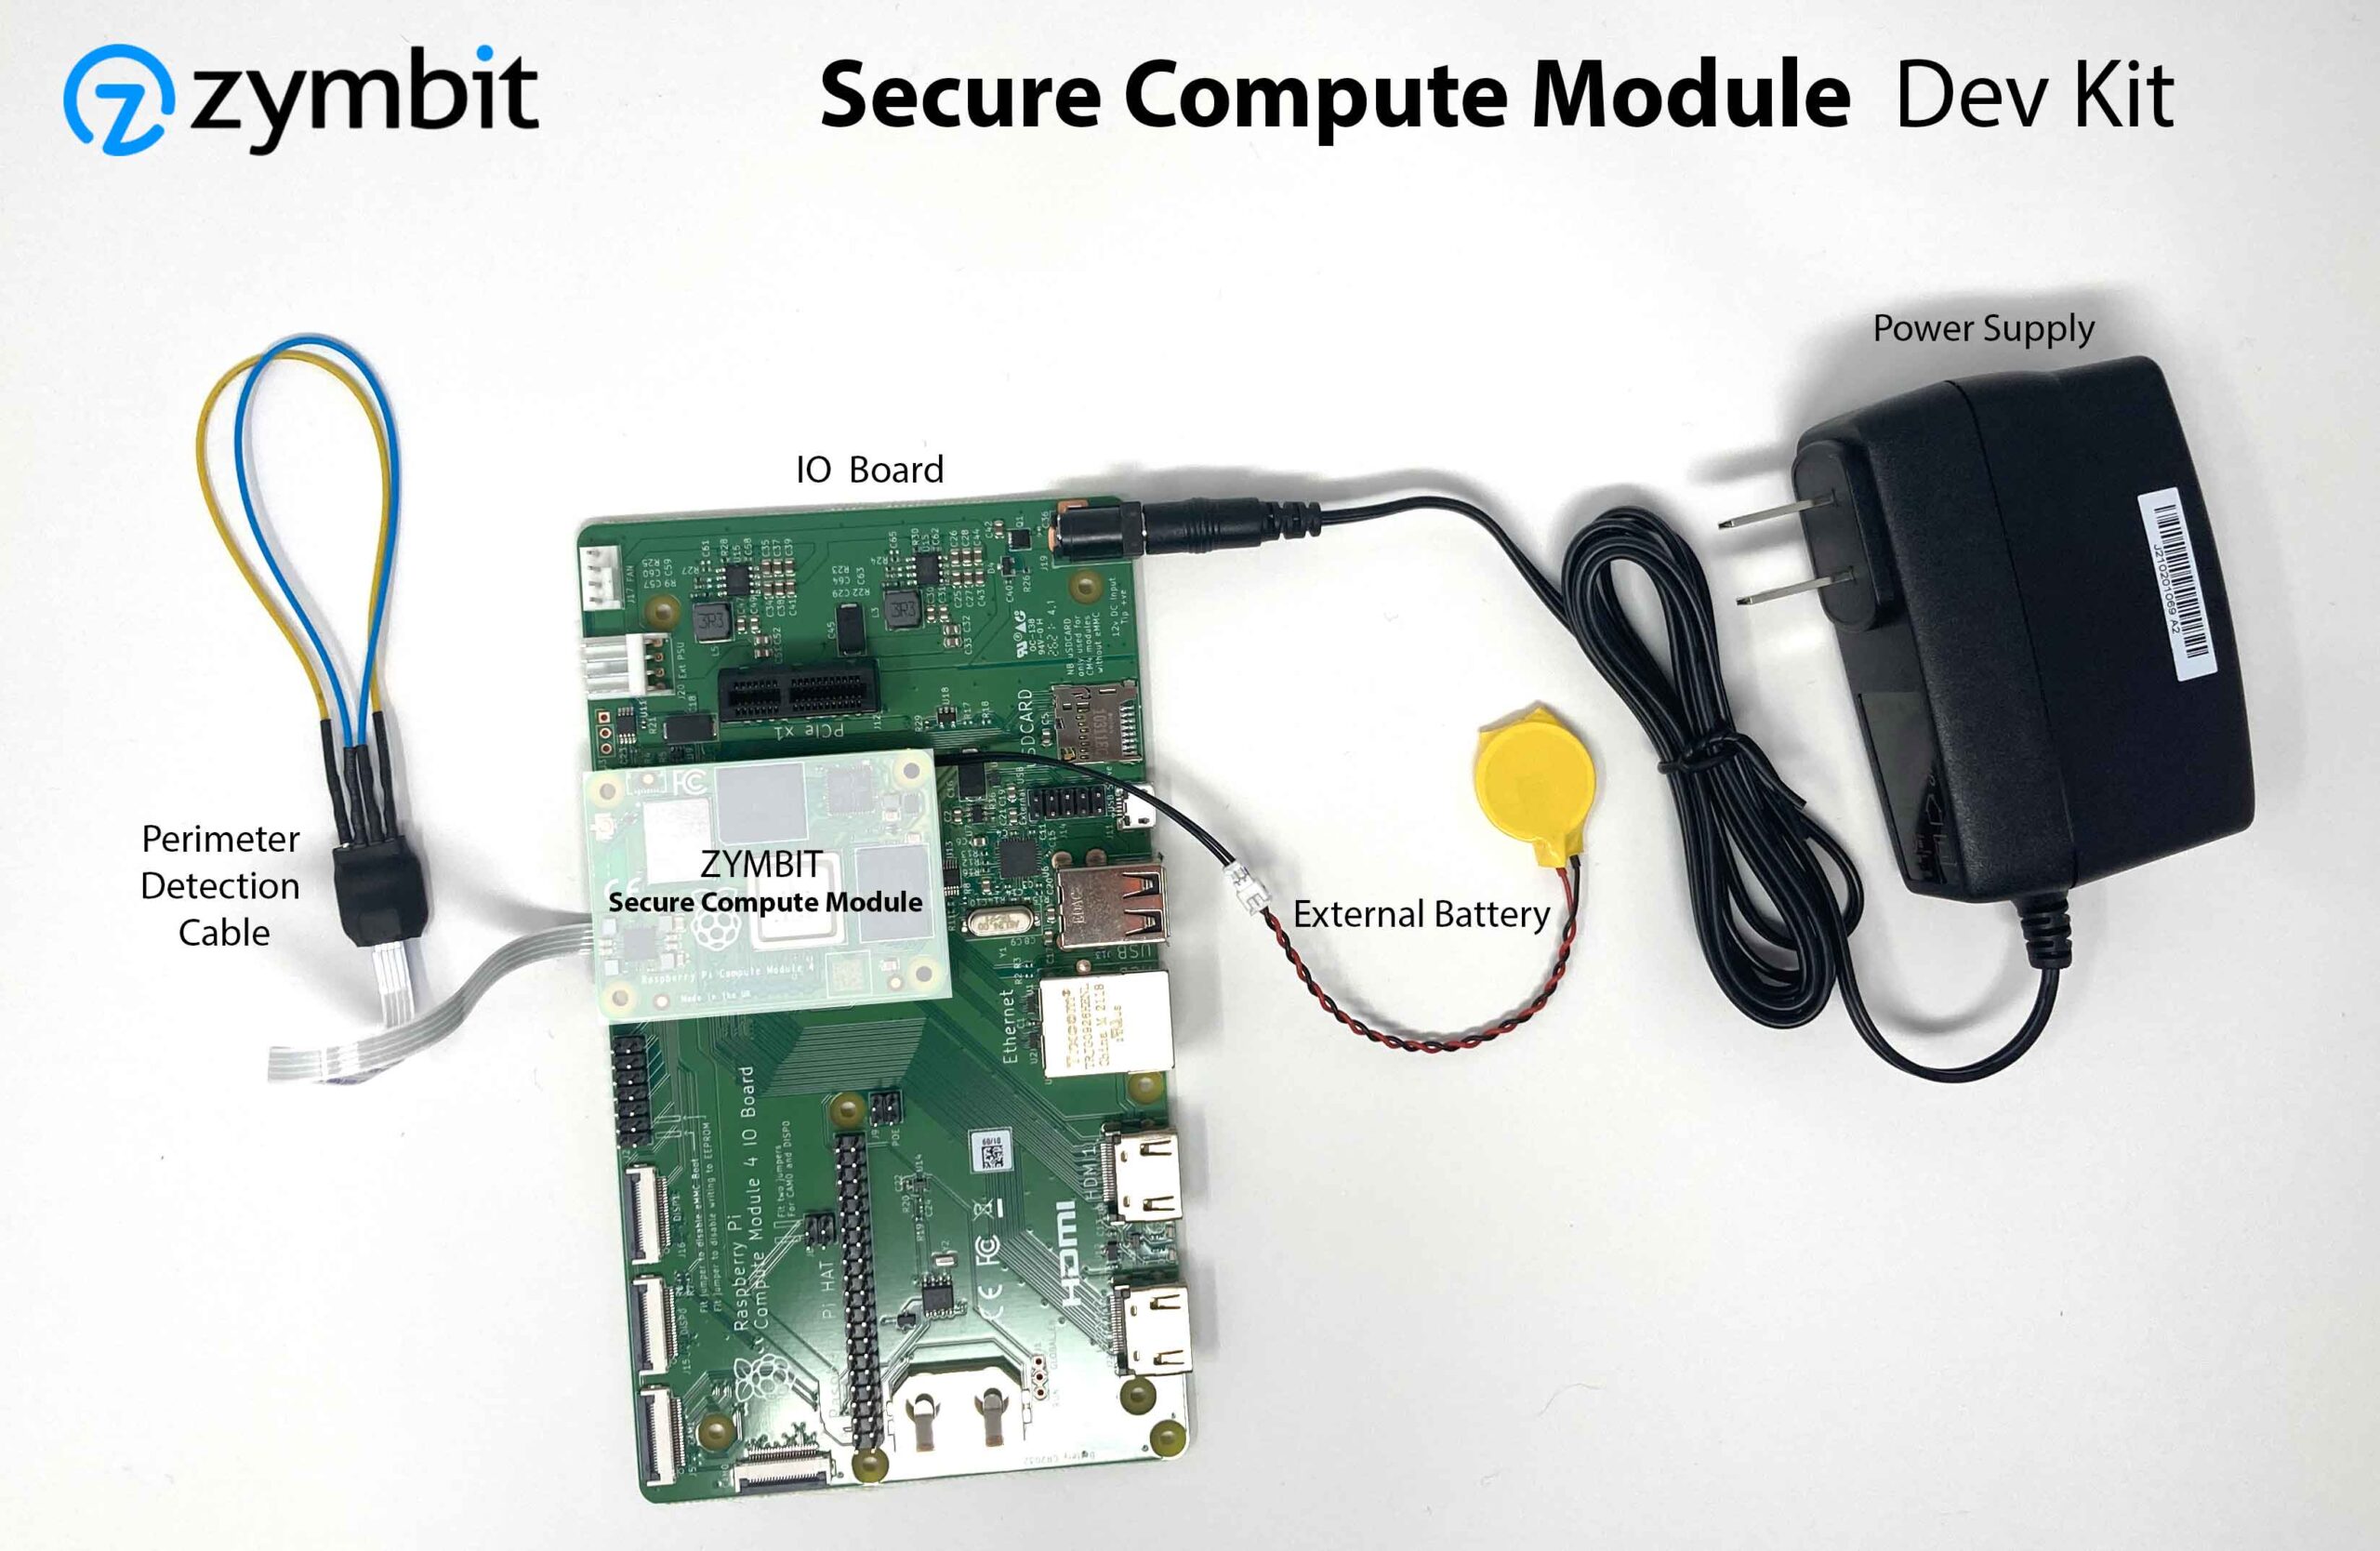 zymbit secure compute module developer kit